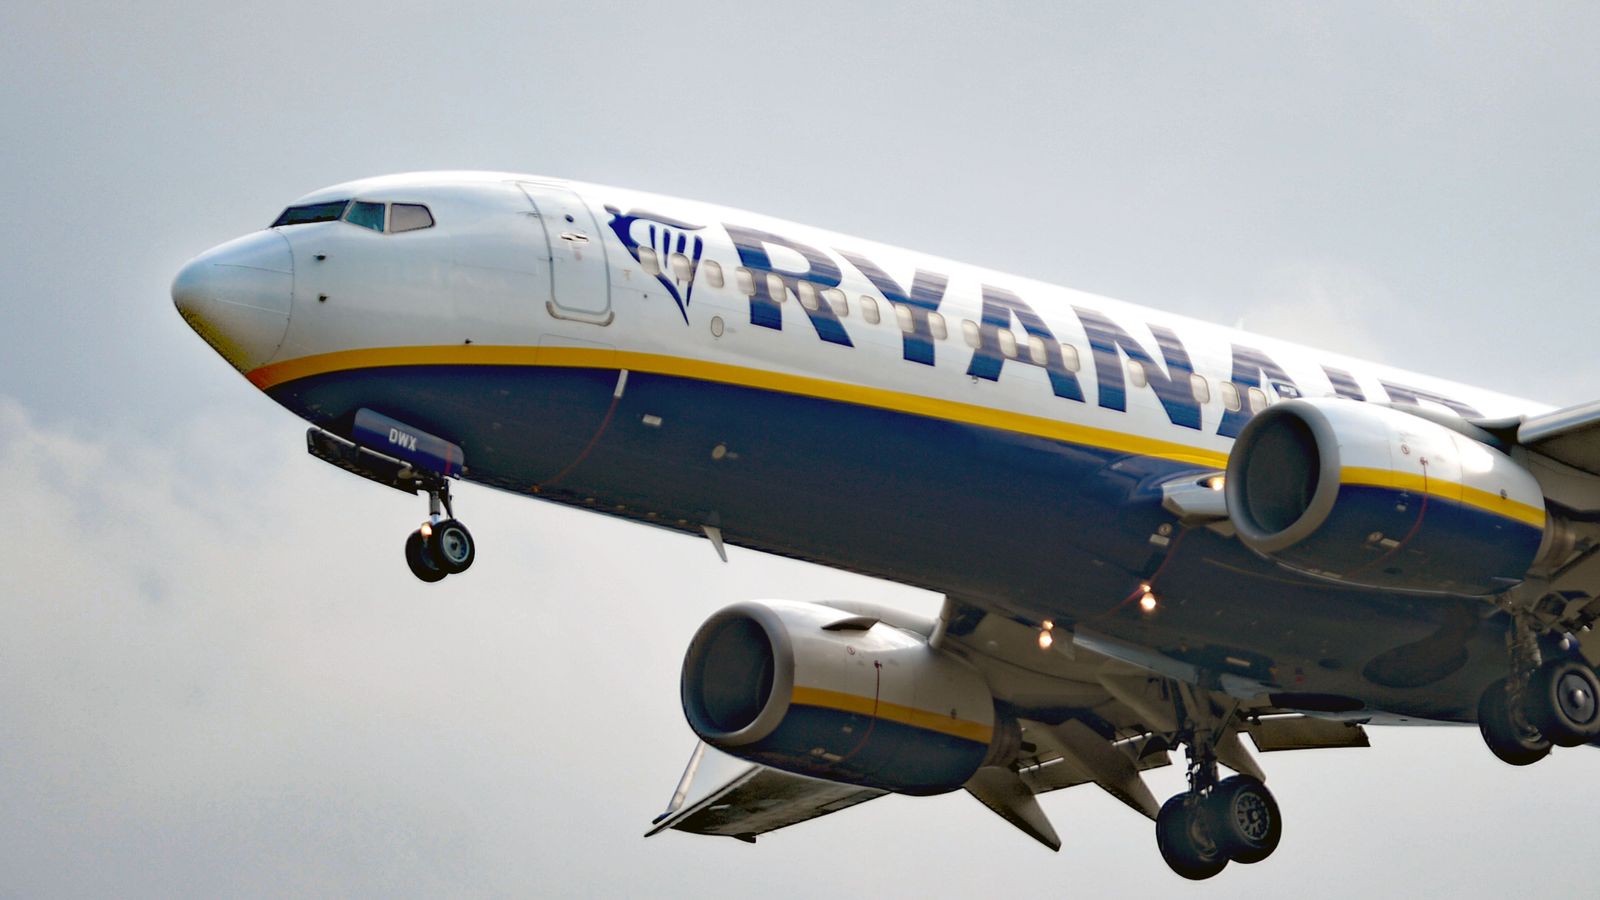 Average Ryanair fares up 24% - as company forecasts record profits